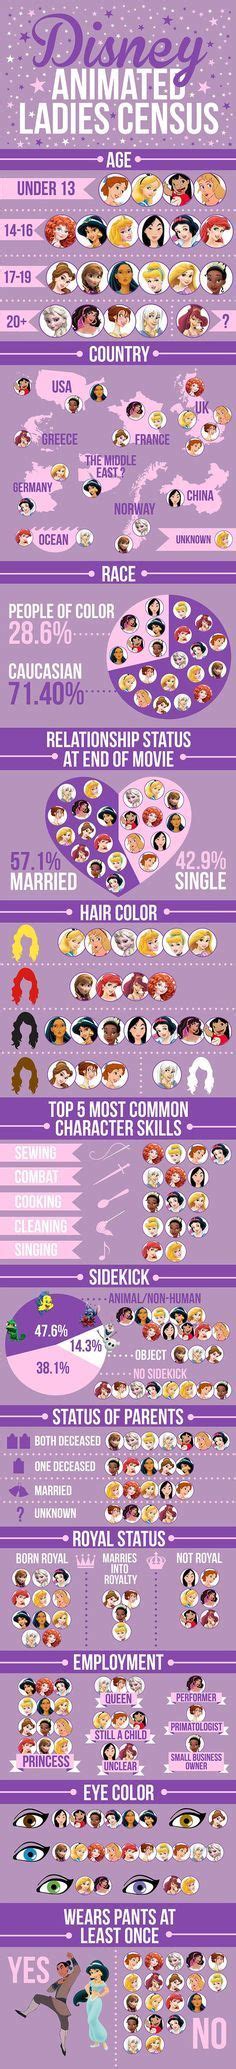 We Did An In Depth Analysis Of 21 Disney Female Leads Disney Princess Movies Disney Princess